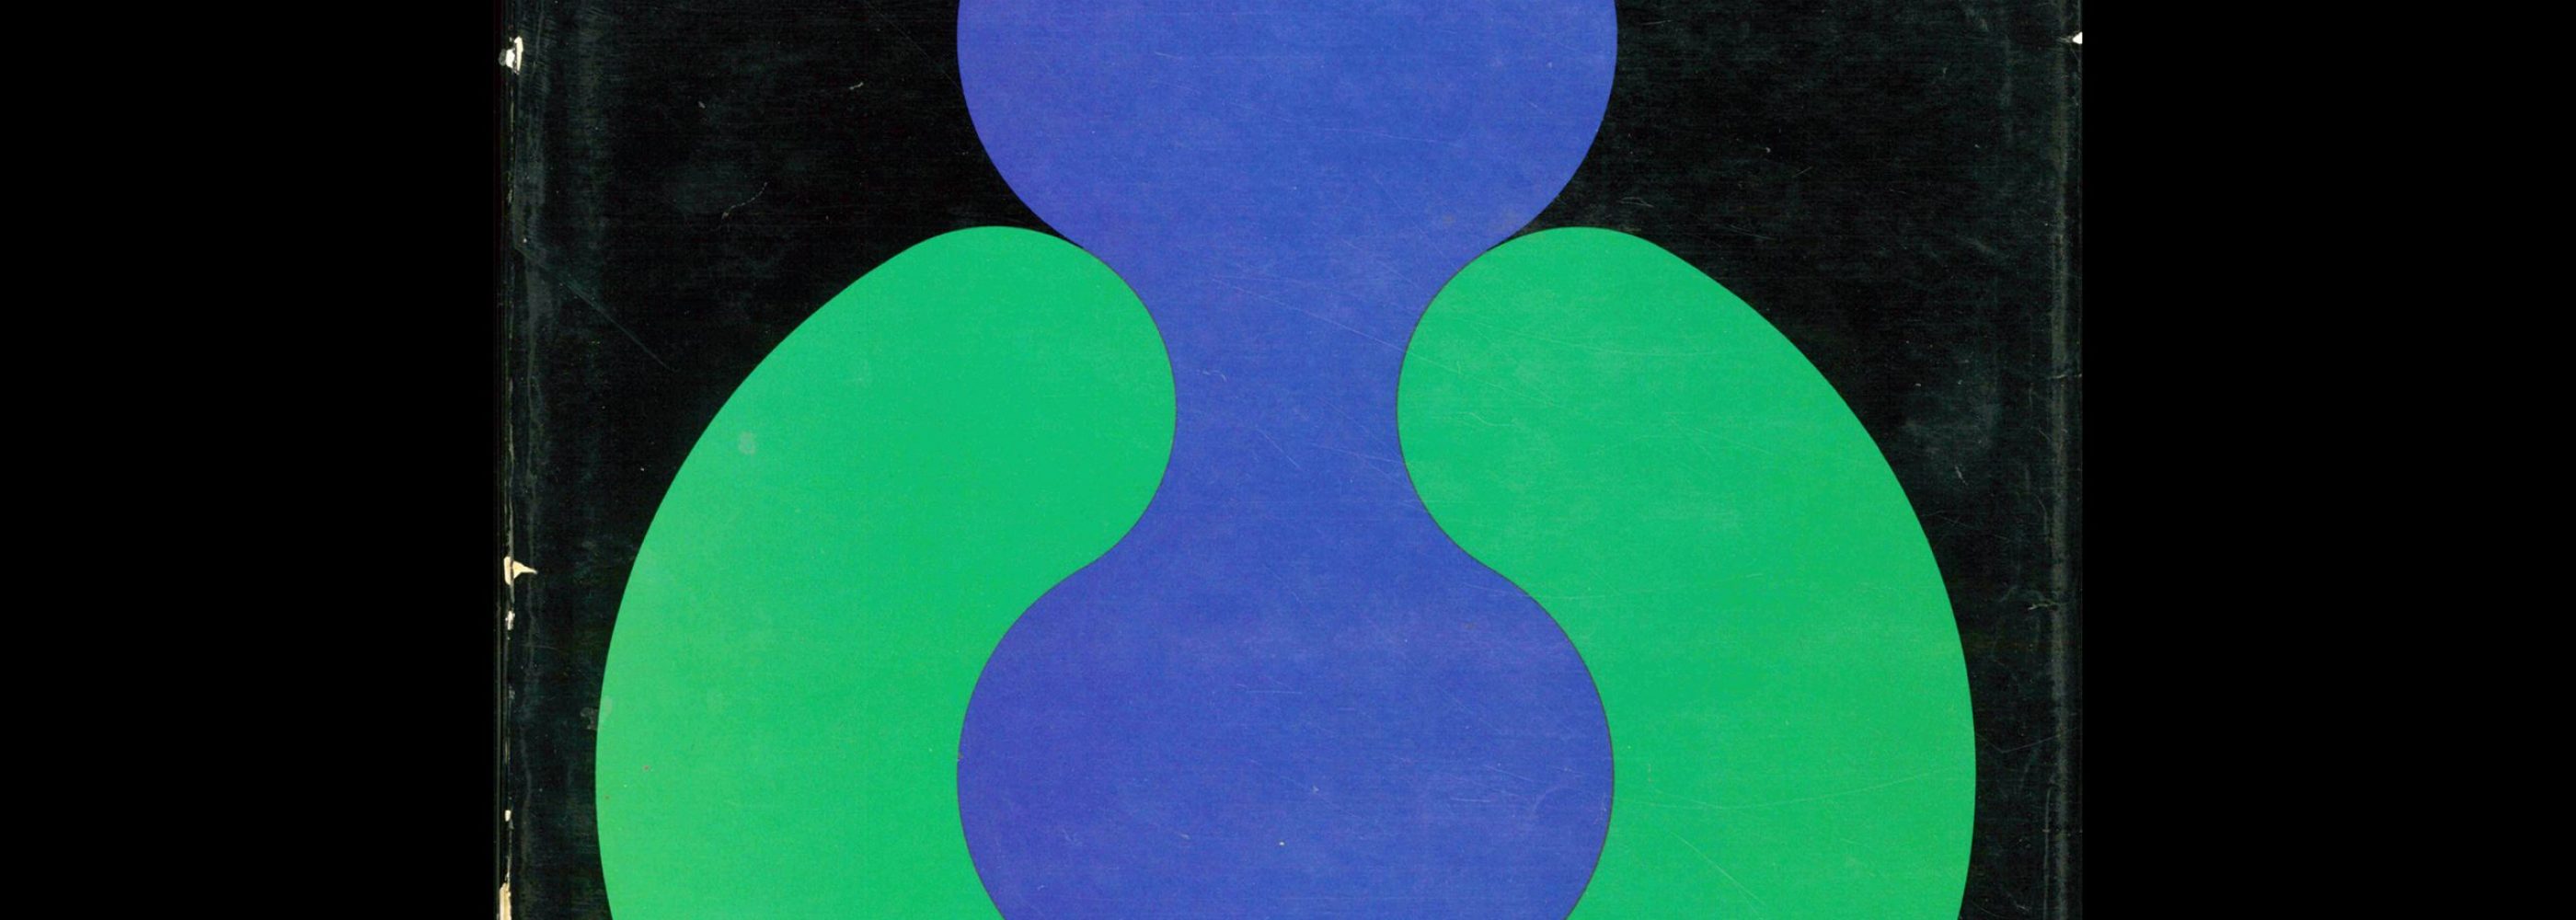 Graphis Annual 1975|76. Cover design by Erberto Carboni